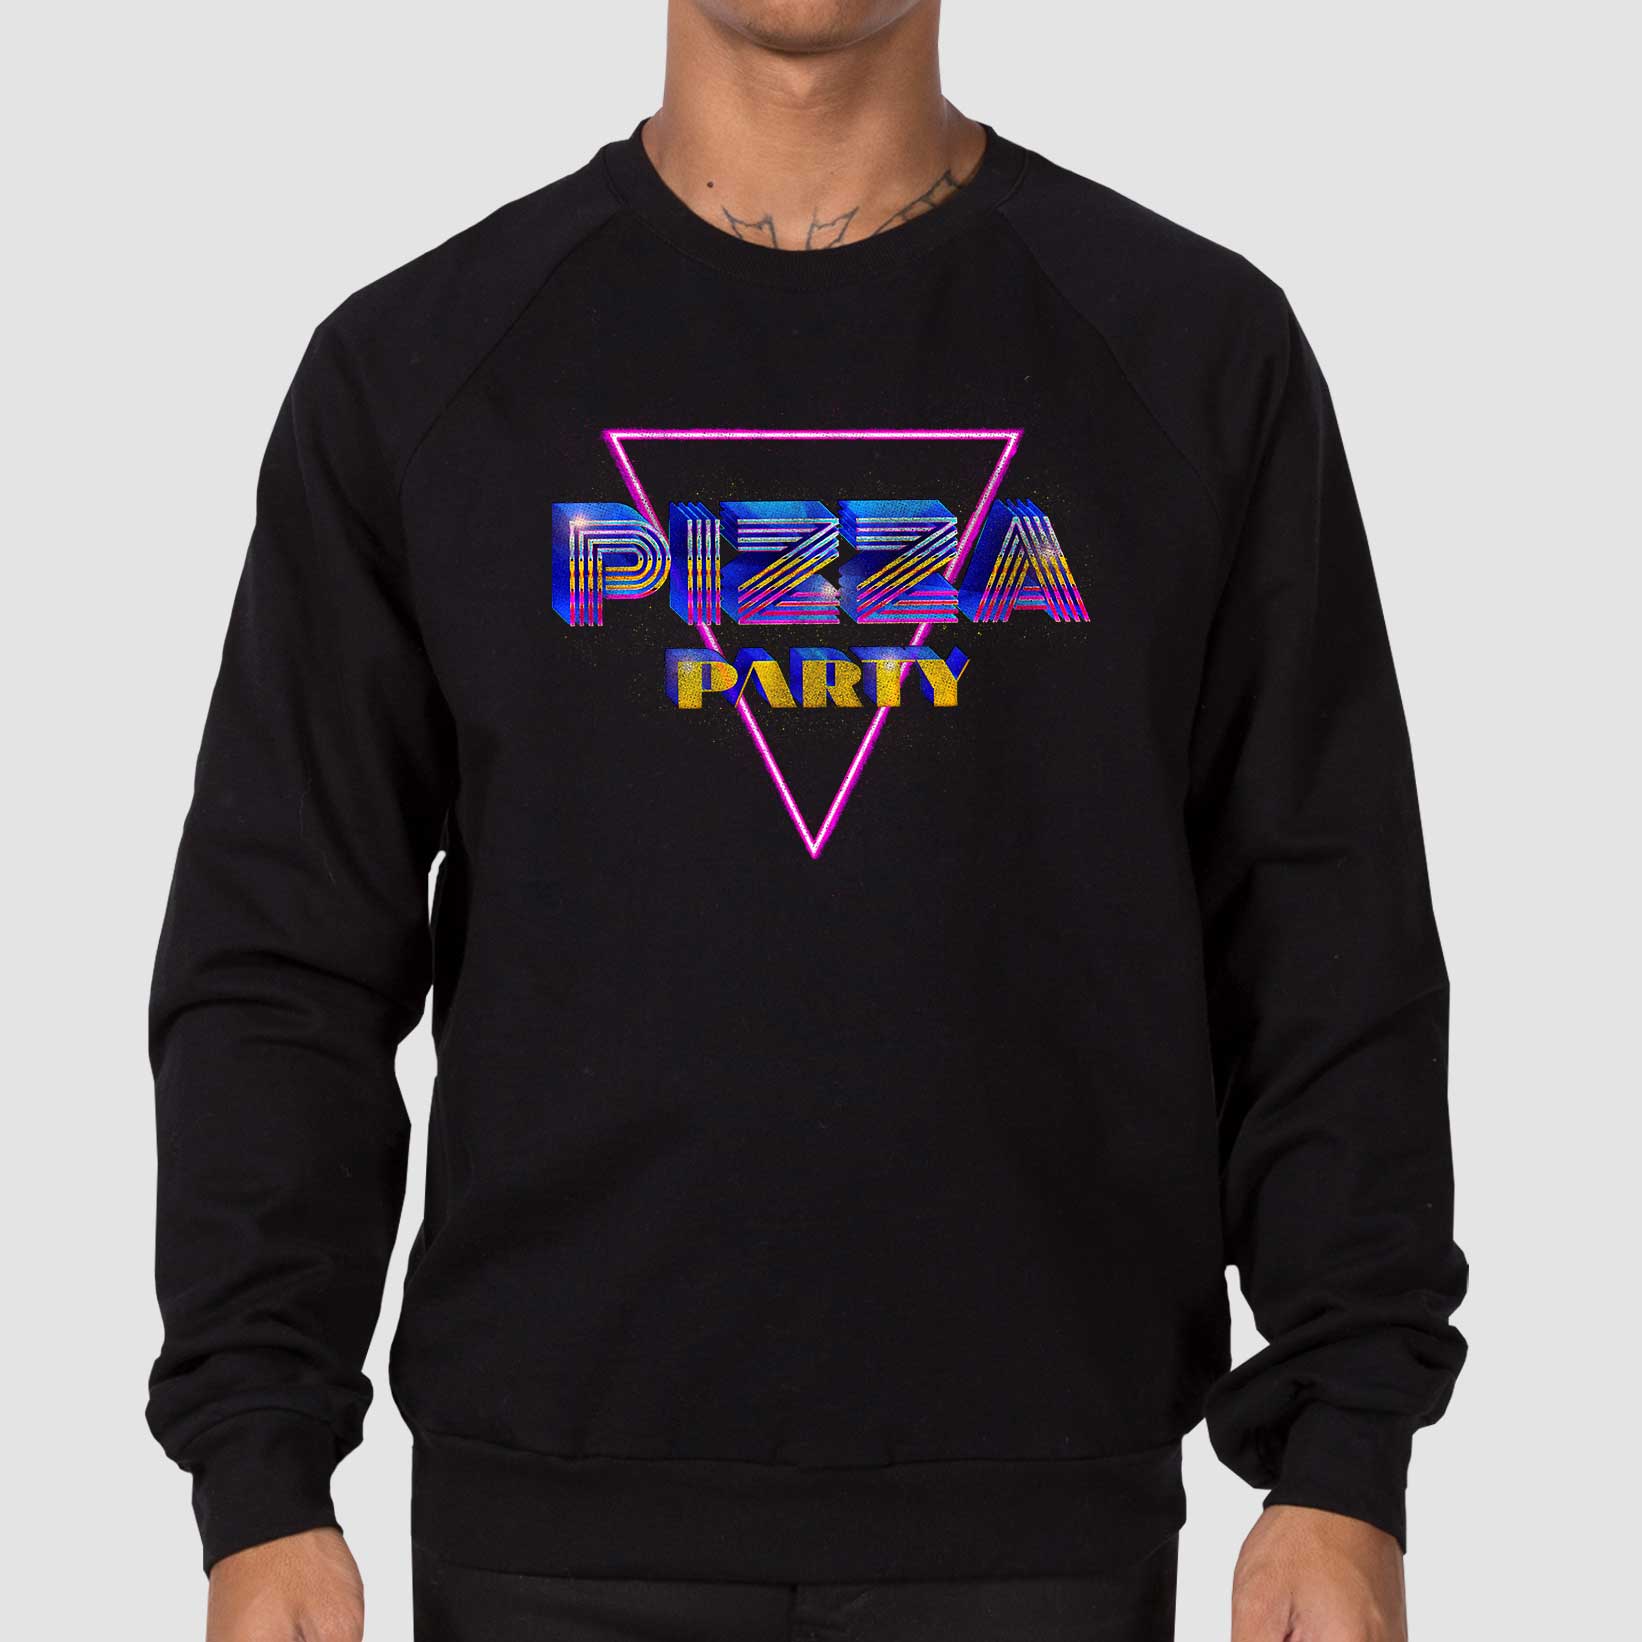  Pizza Party Unisex California Fleece Raglan Sweatshirt - Black by Snaxtime